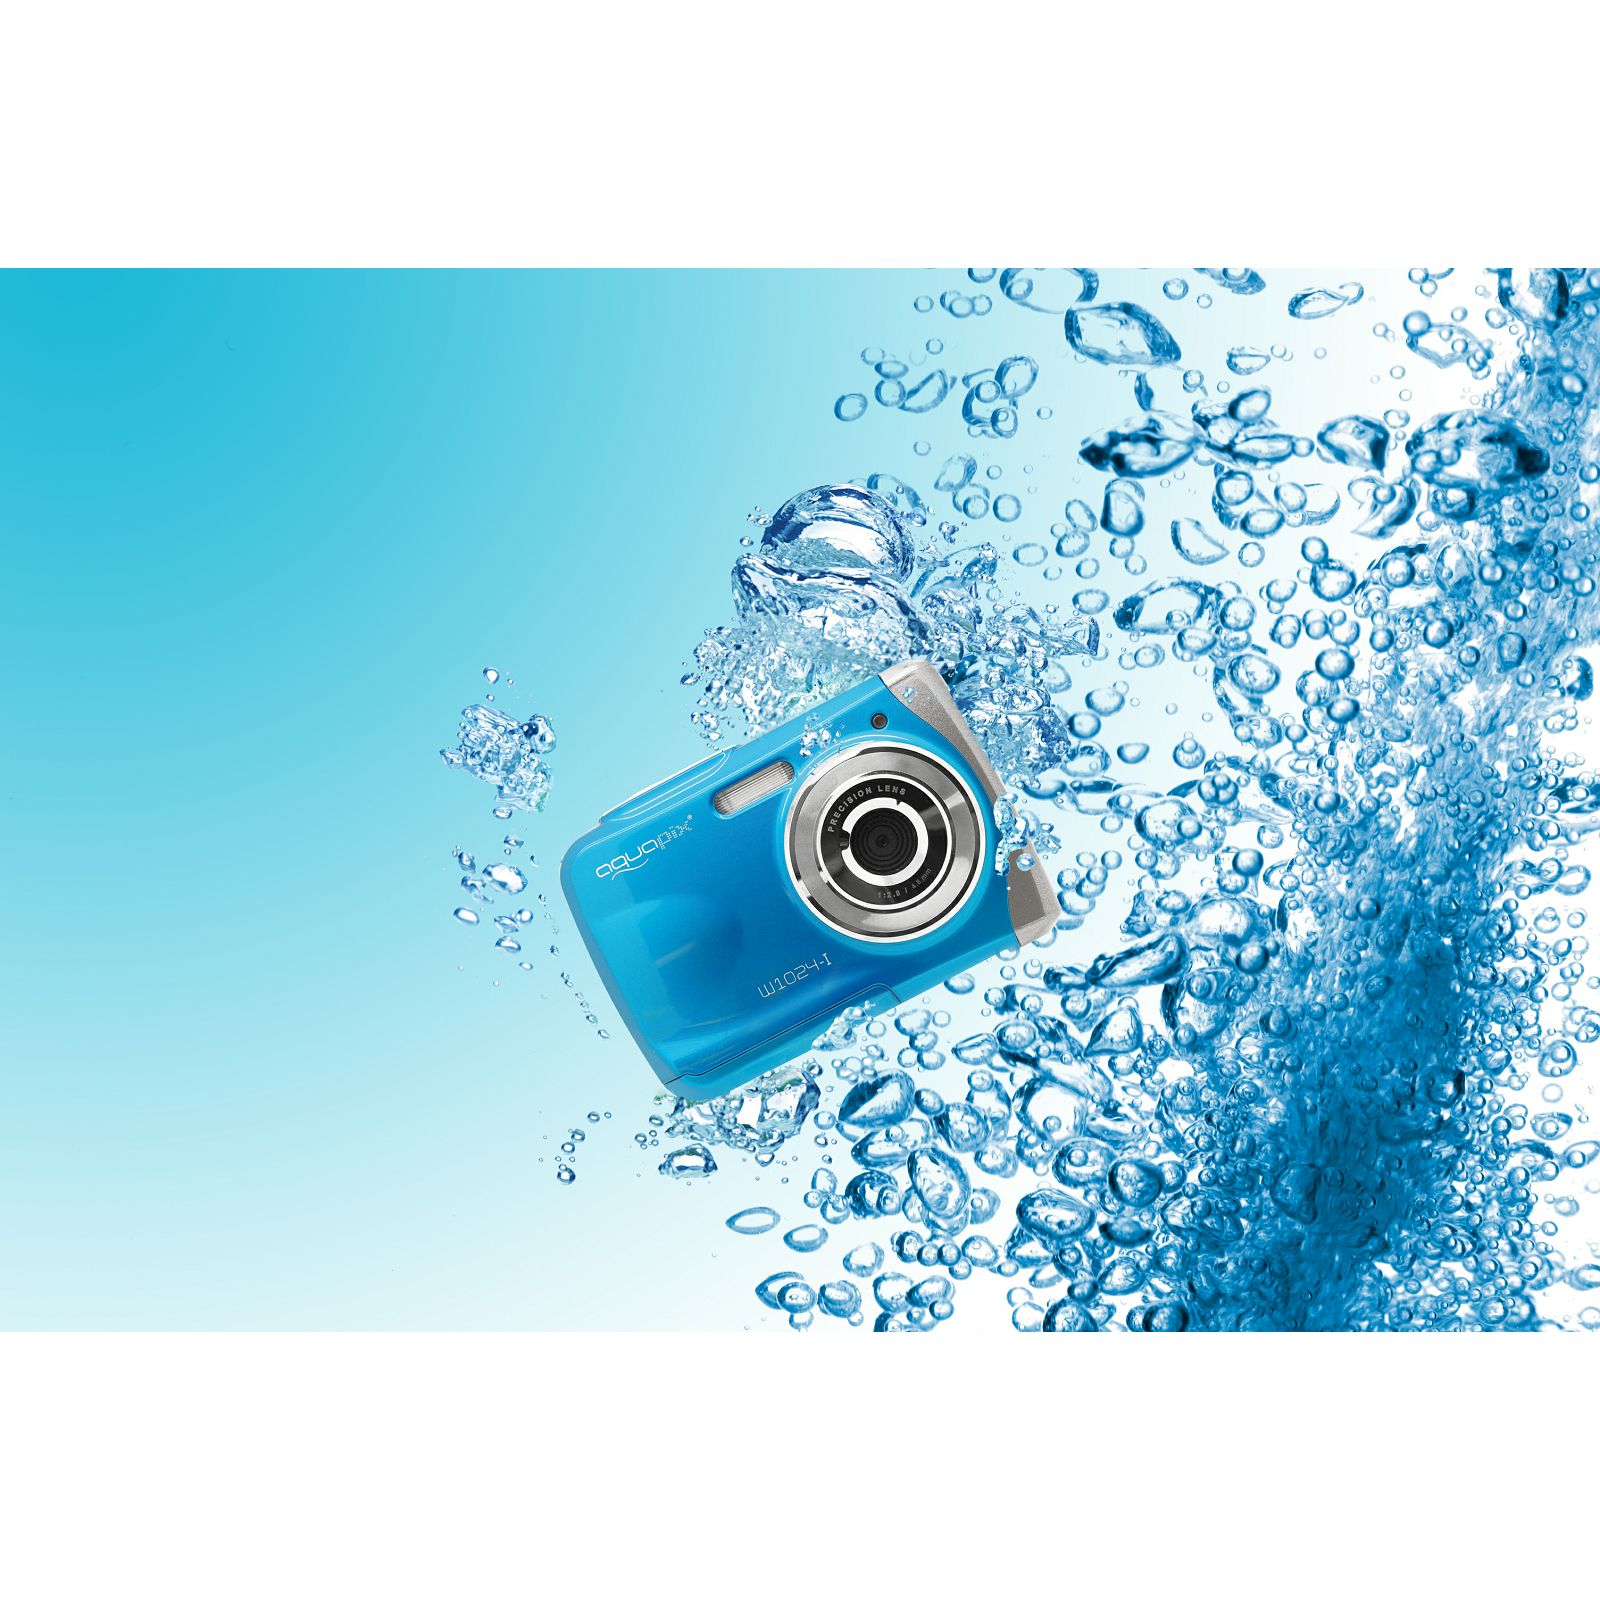 Aquapix W1024-I "Splash" Iceblue (10012) 10MP 4x zoom LCD podvodni vodonepropusni digitalni fotoaparat do 3m Waterproof digital camera